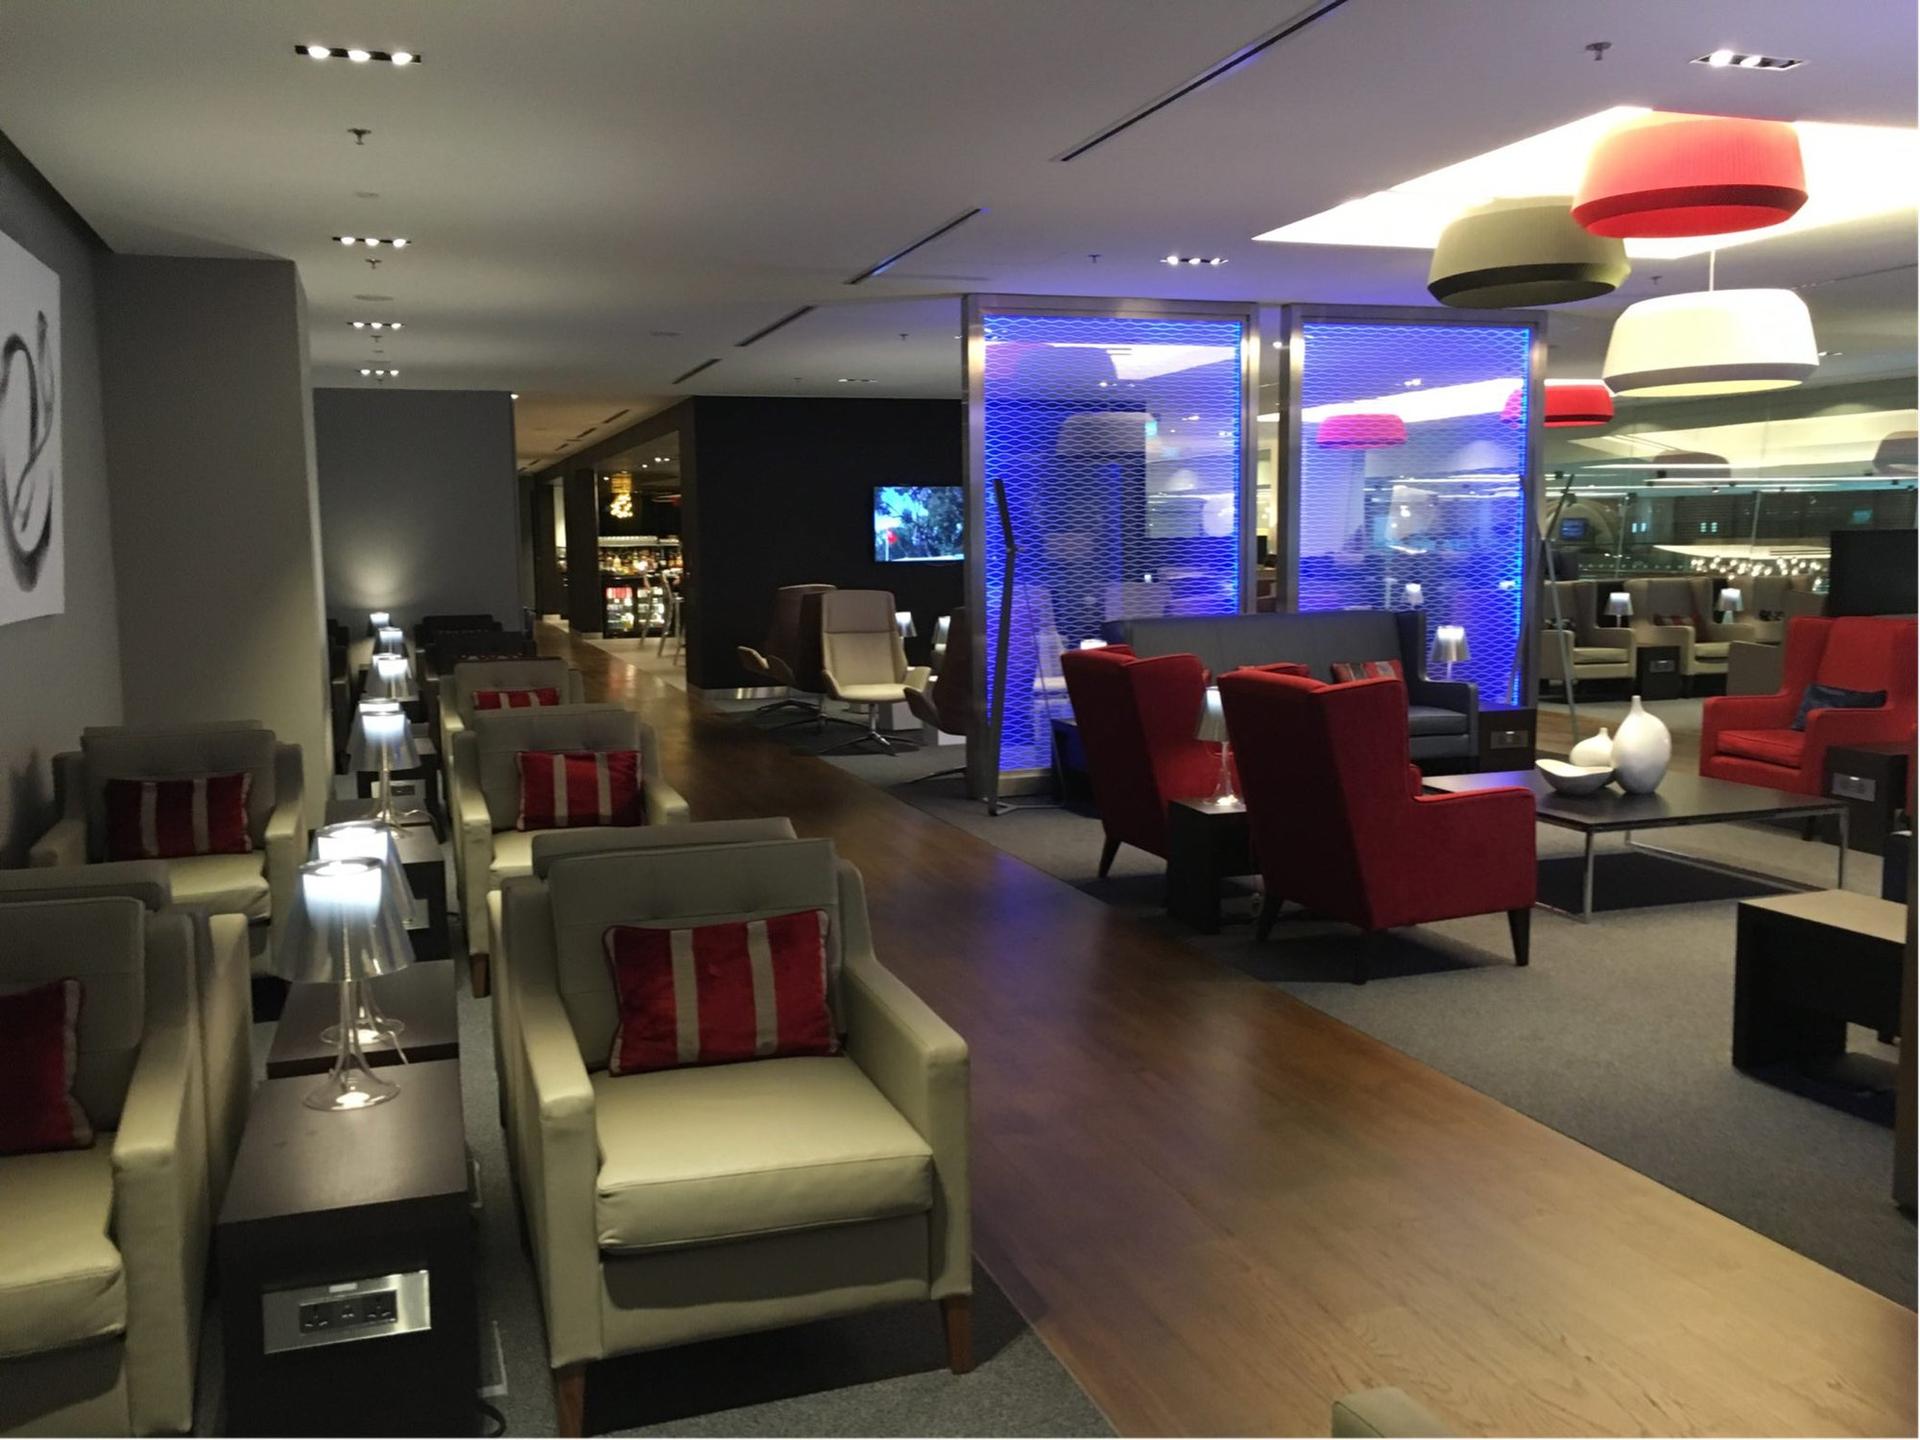 British Airways Singapore Lounge and Concorde Bar image 6 of 15